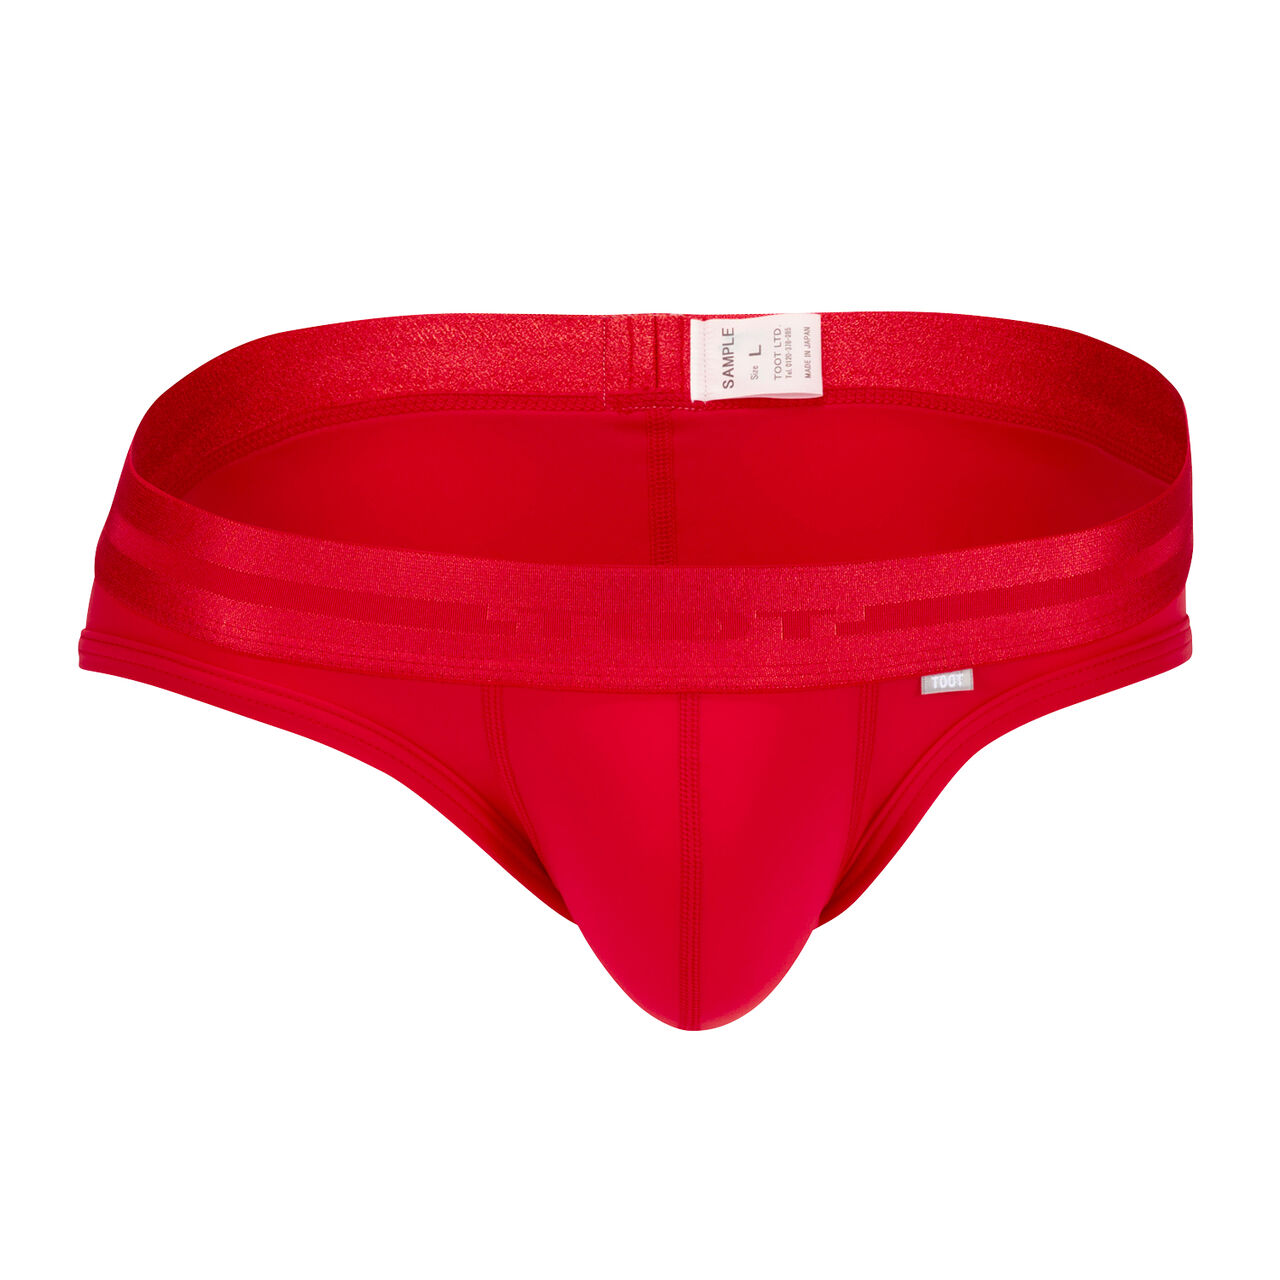 ReNEW TOOT NYLON BIKINI | Men's Underwear brand TOOT official website